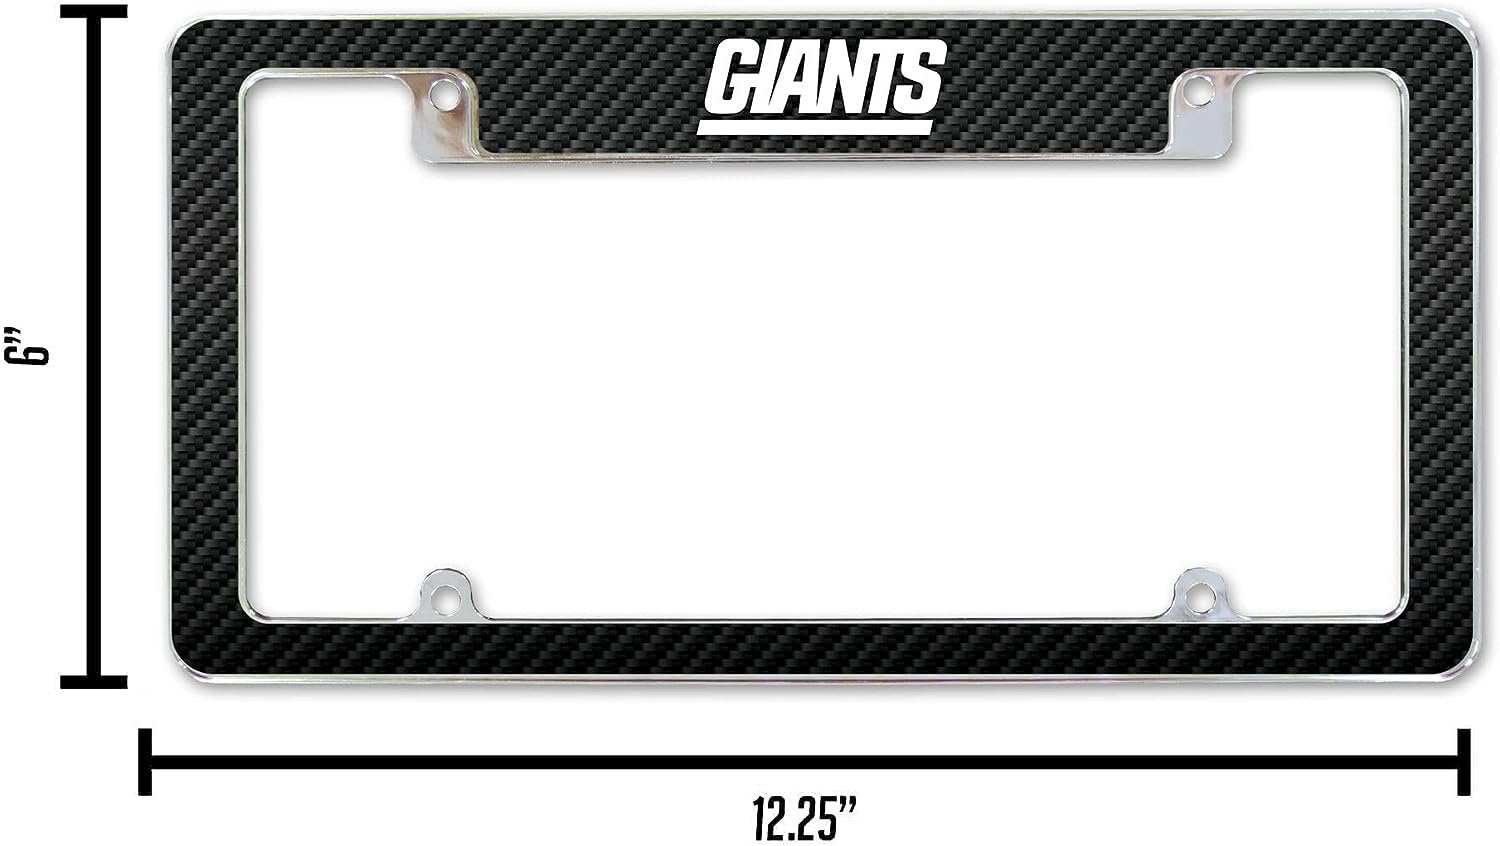 New York Giants Metal License Plate Frame Chrome Tag Cover Carbon Fiber Design 6x12 Inch